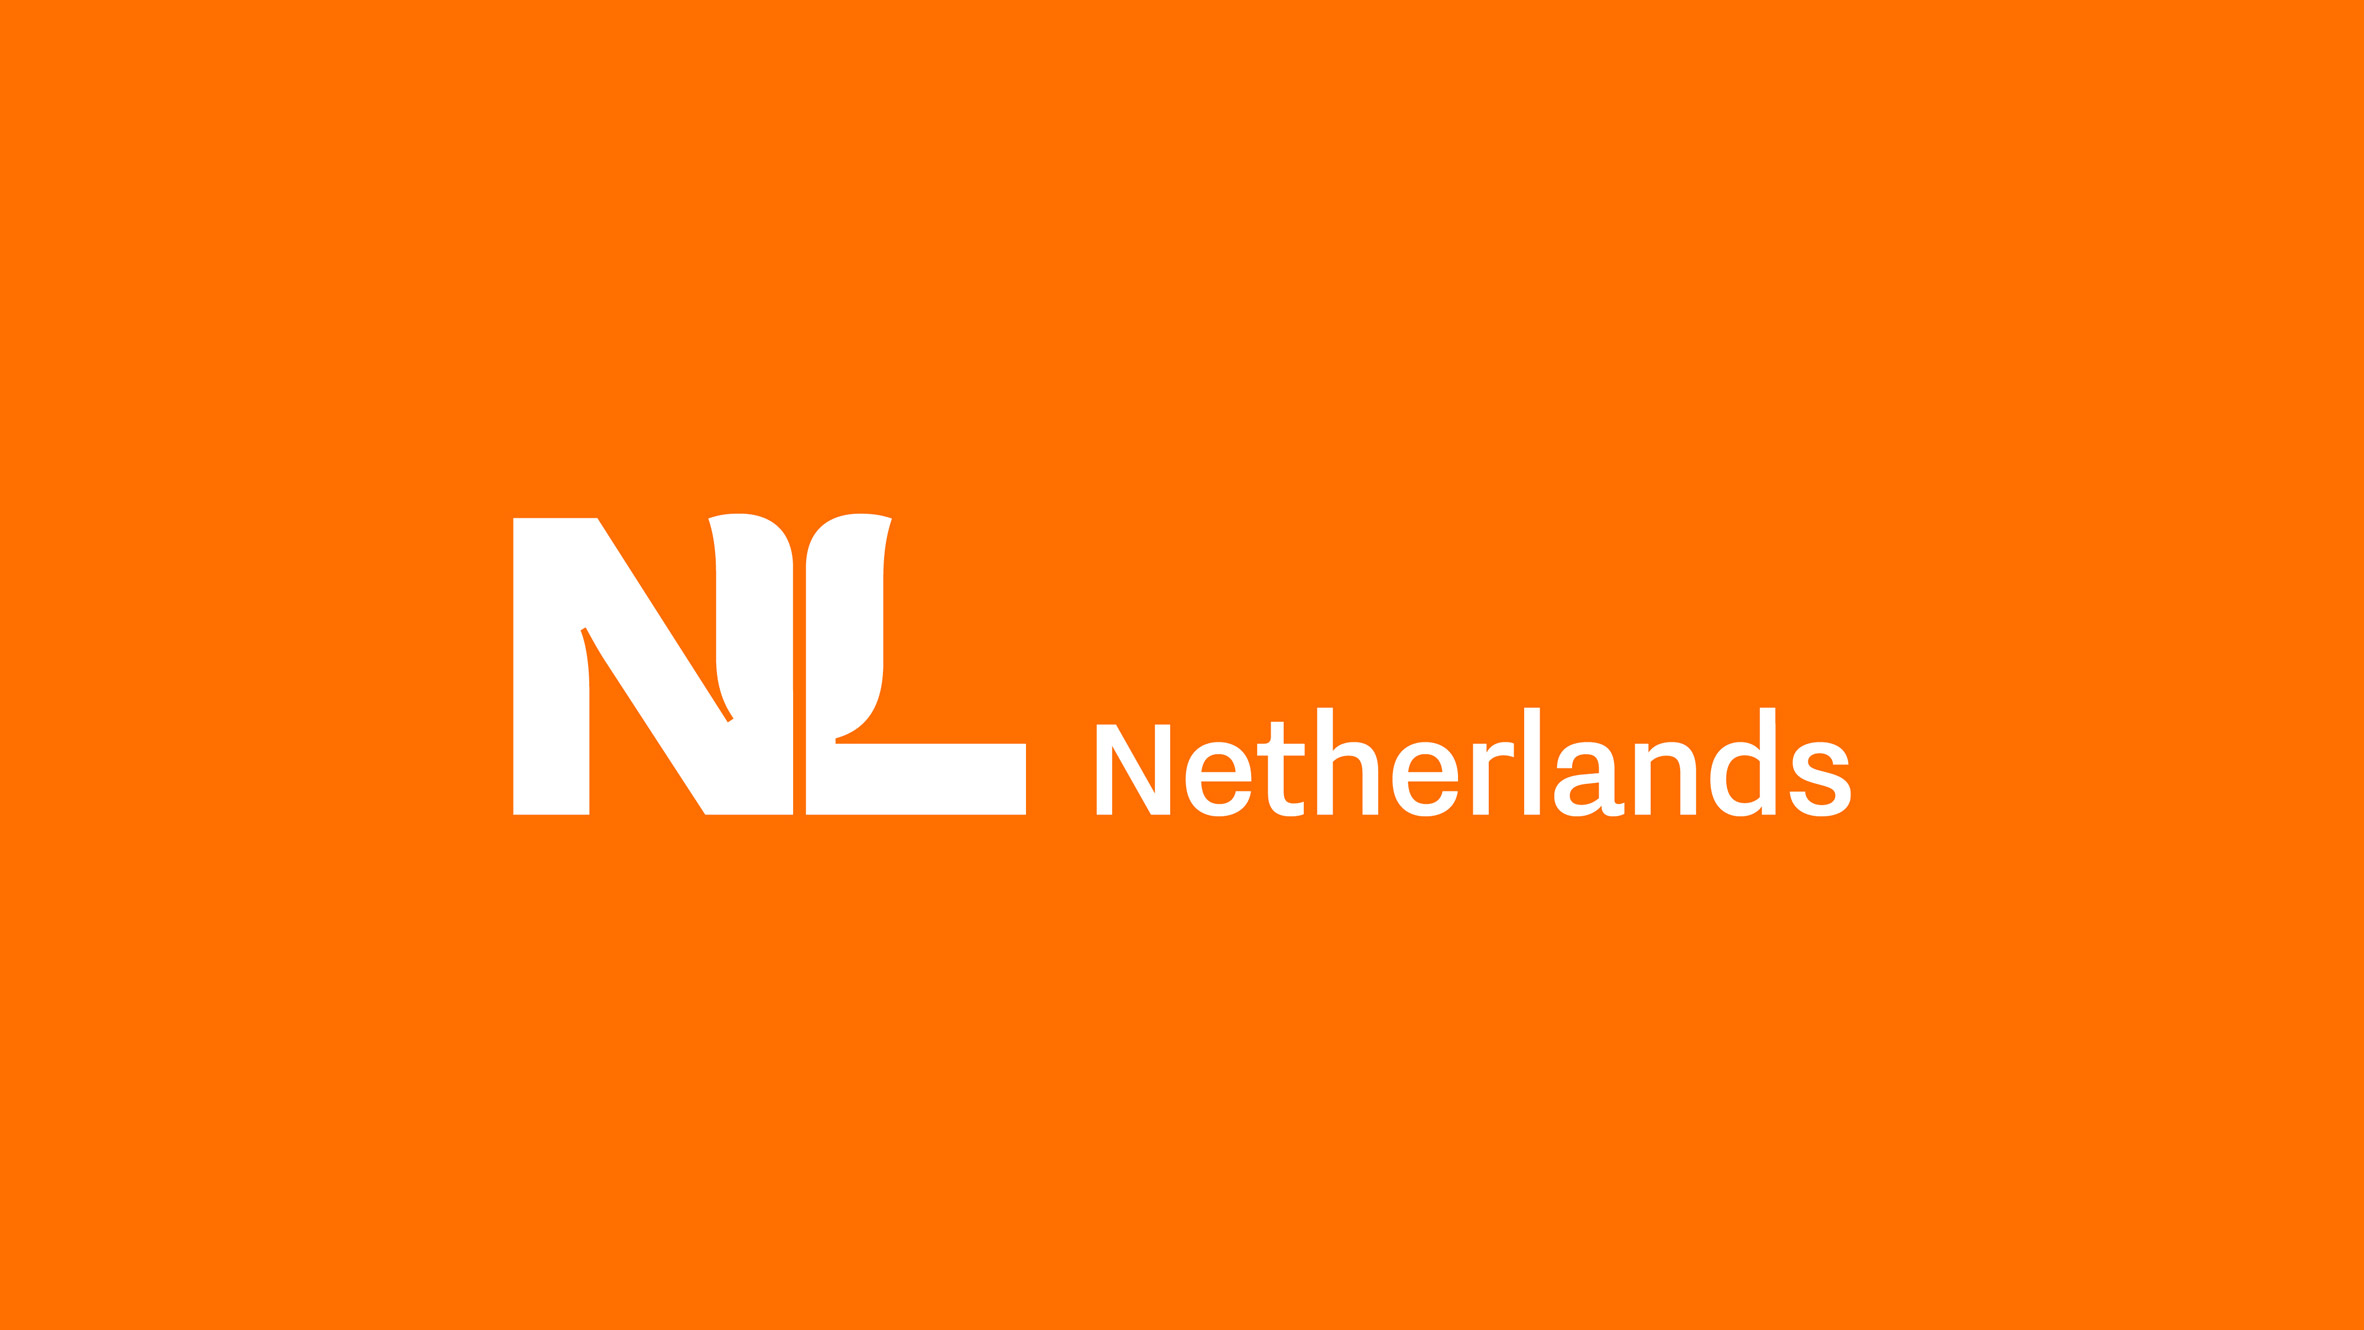 Rebranded Netherlands NL logo by Studio Dumbar